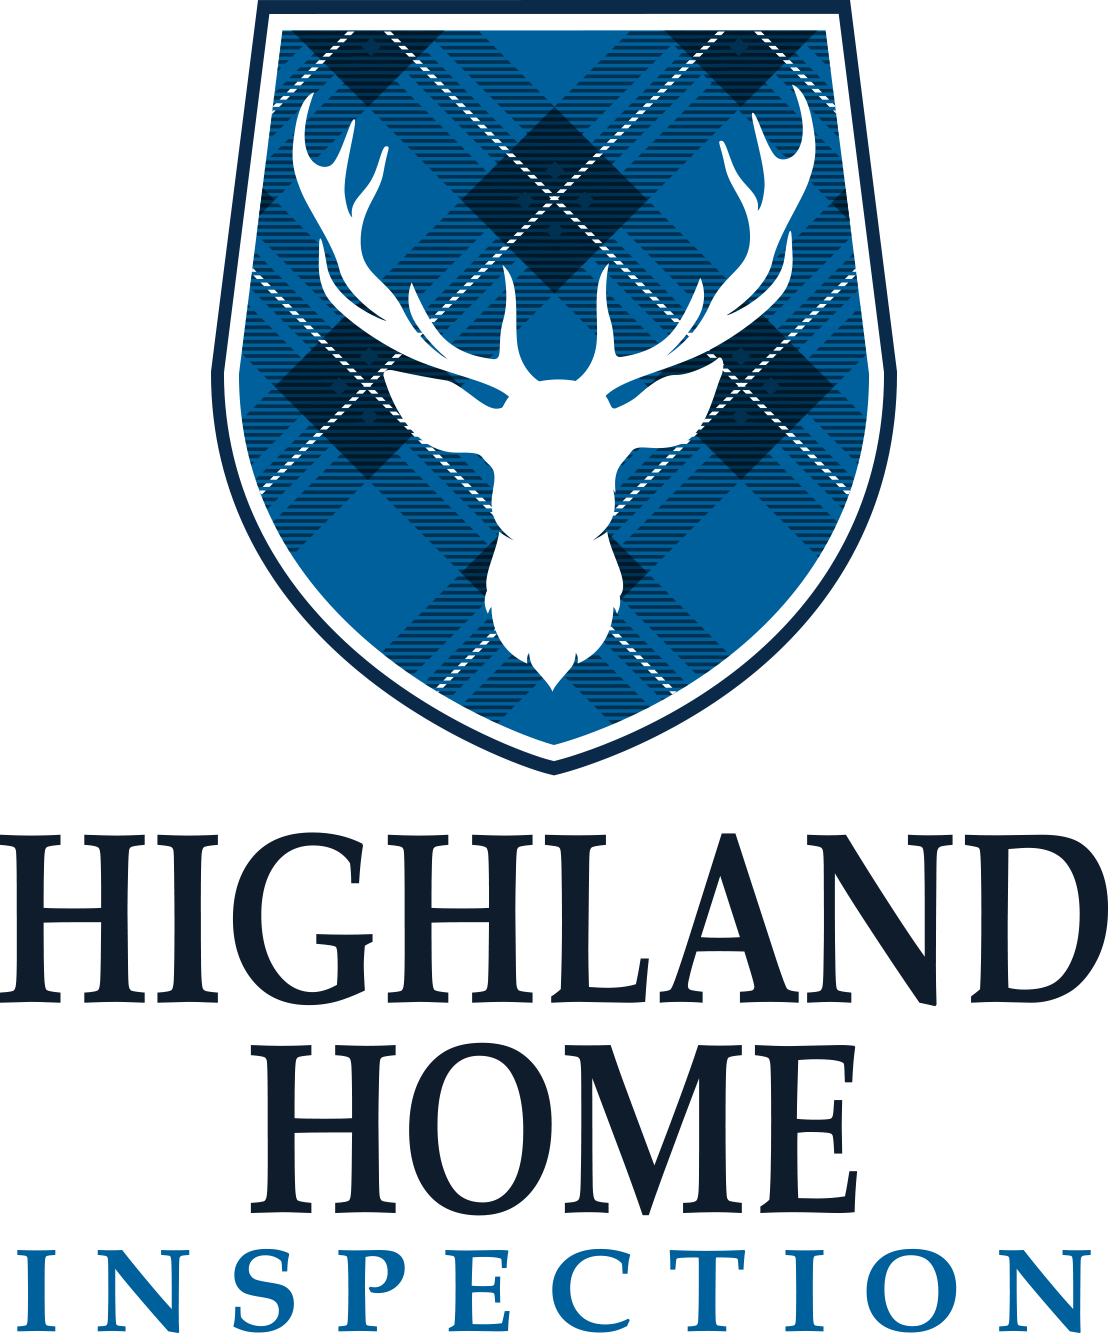 Highland Home Inspection Logo